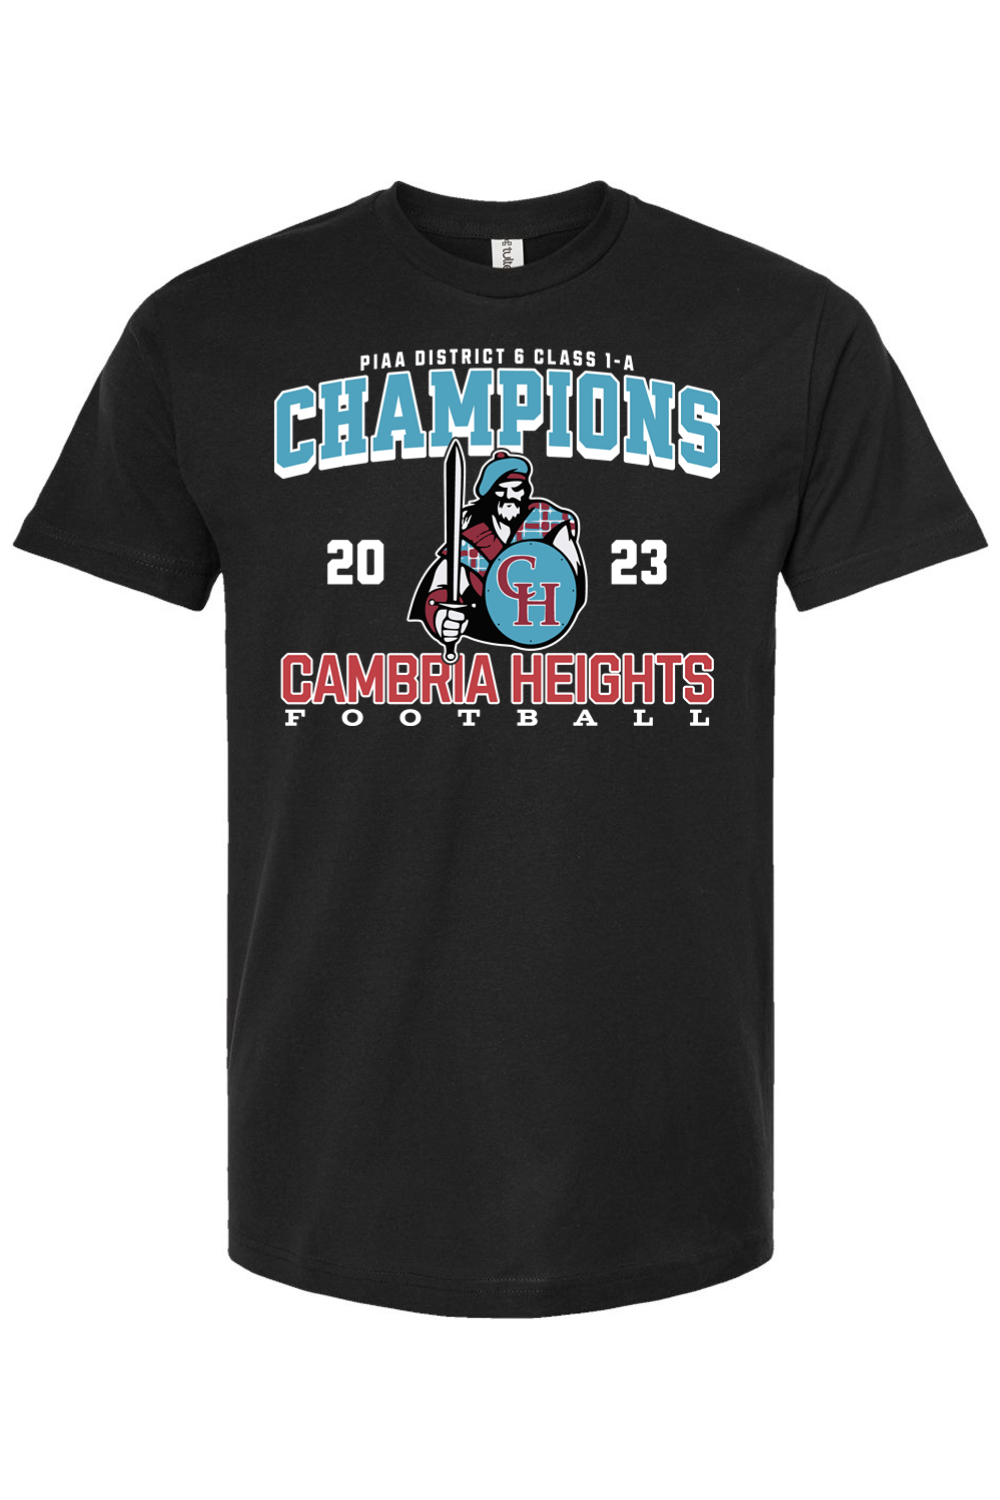 CH Champions - All Star - T-Shirt - Yinzylvania